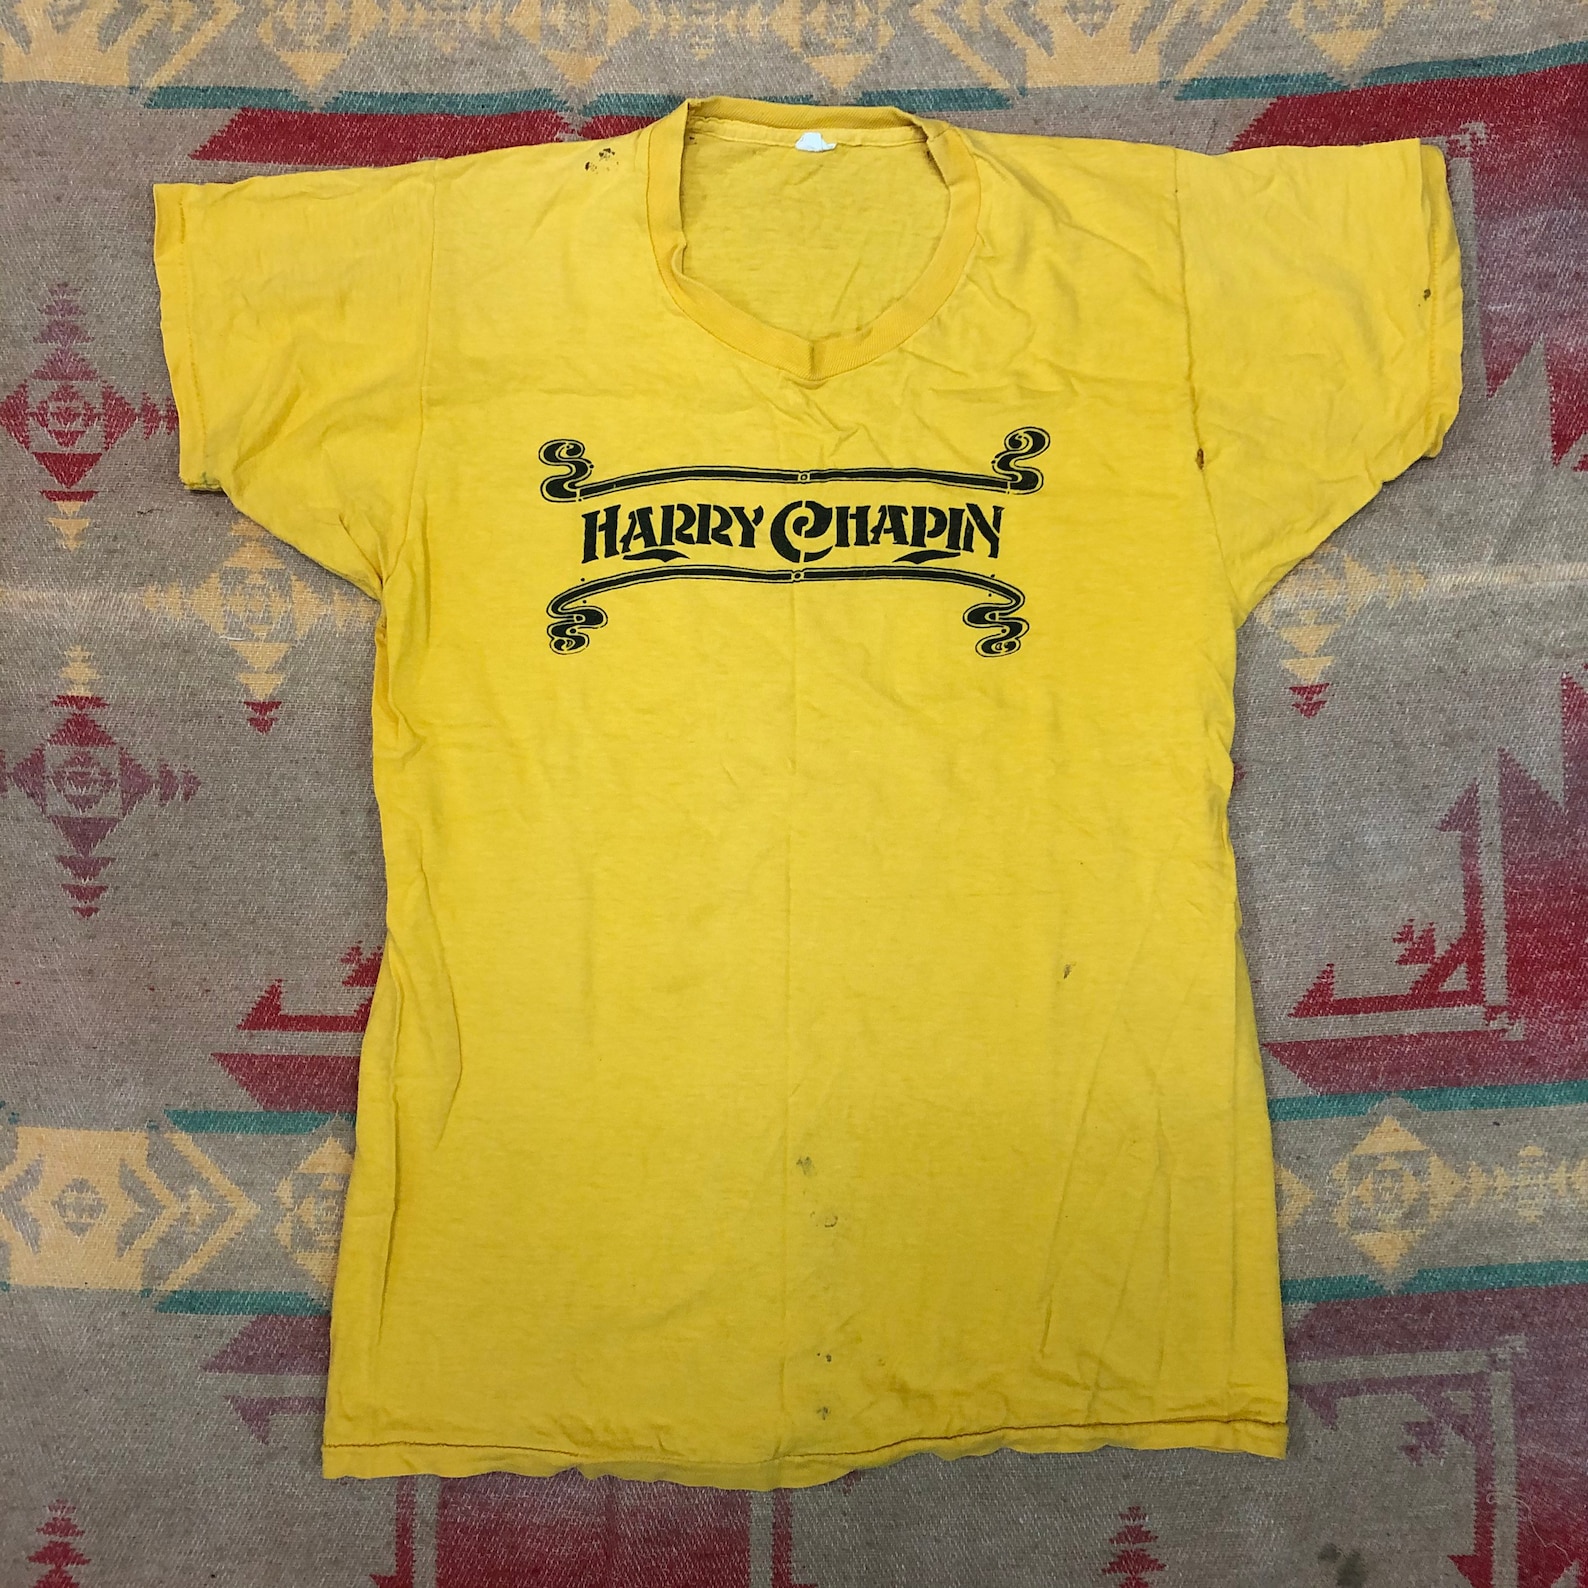 1970s Harry Chapin World Hunger Year yellow t shirt | Etsy